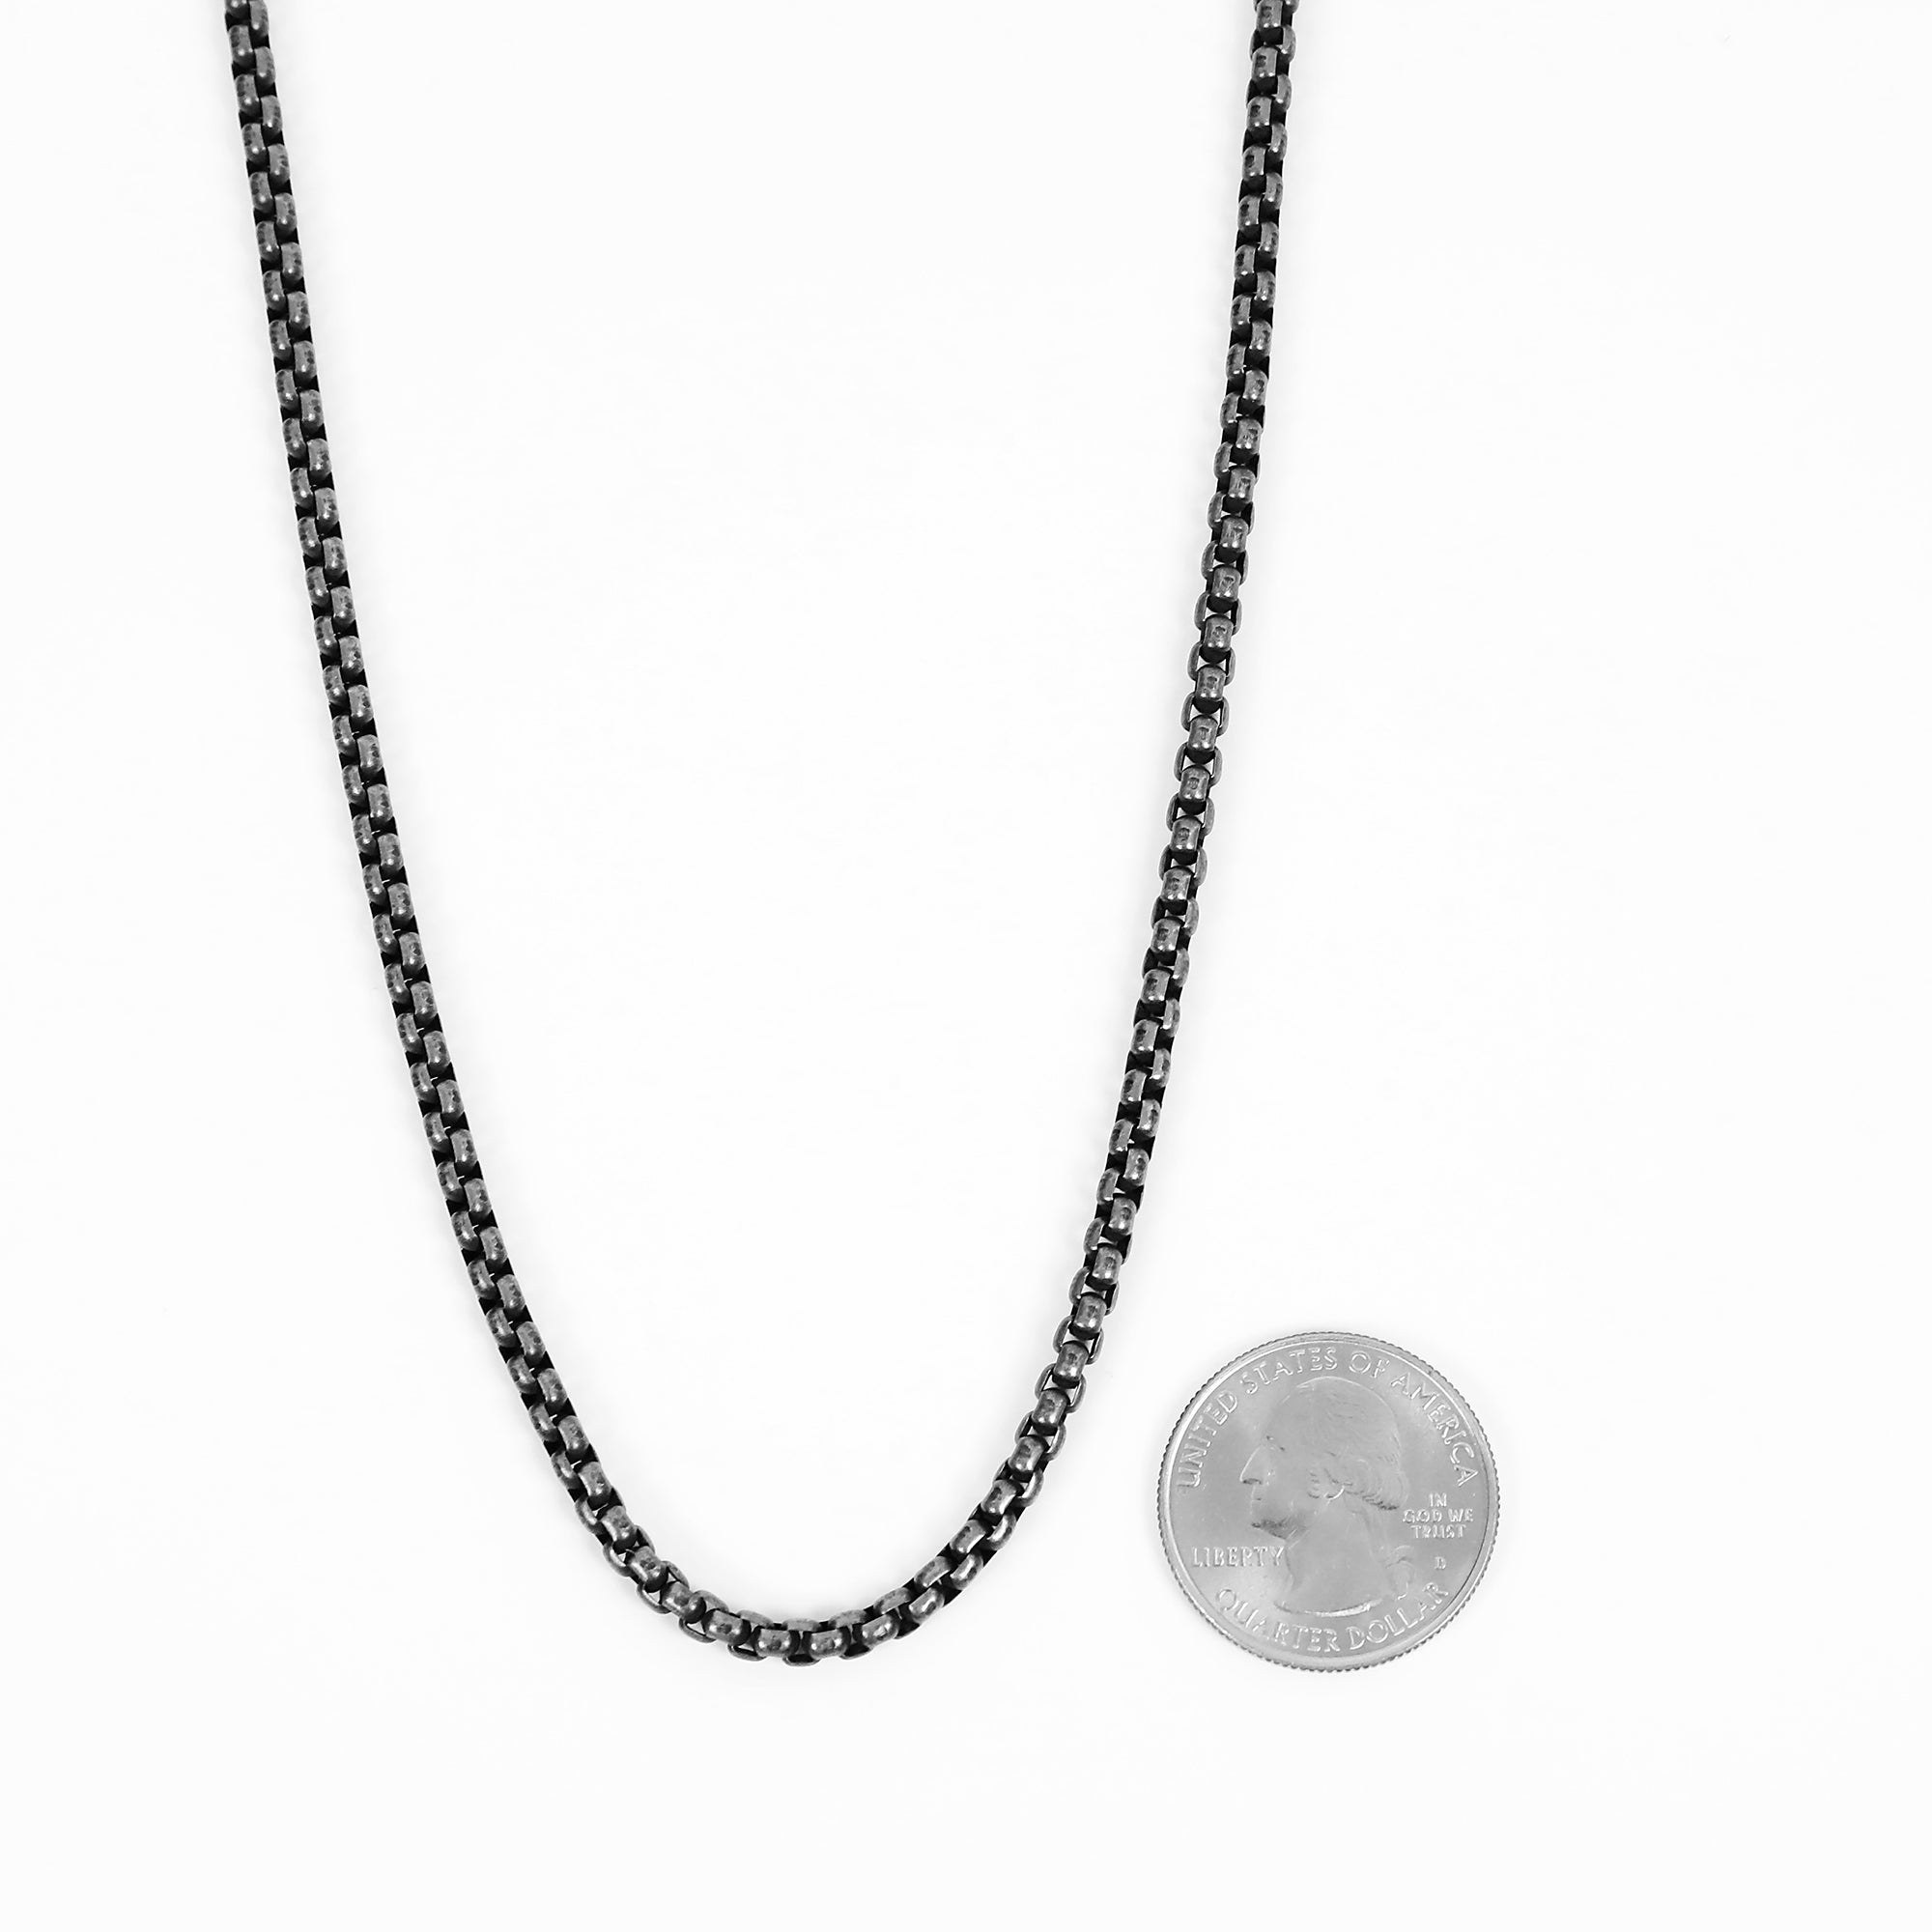 Box Chain Necklace - Antique Silver 3.5mm